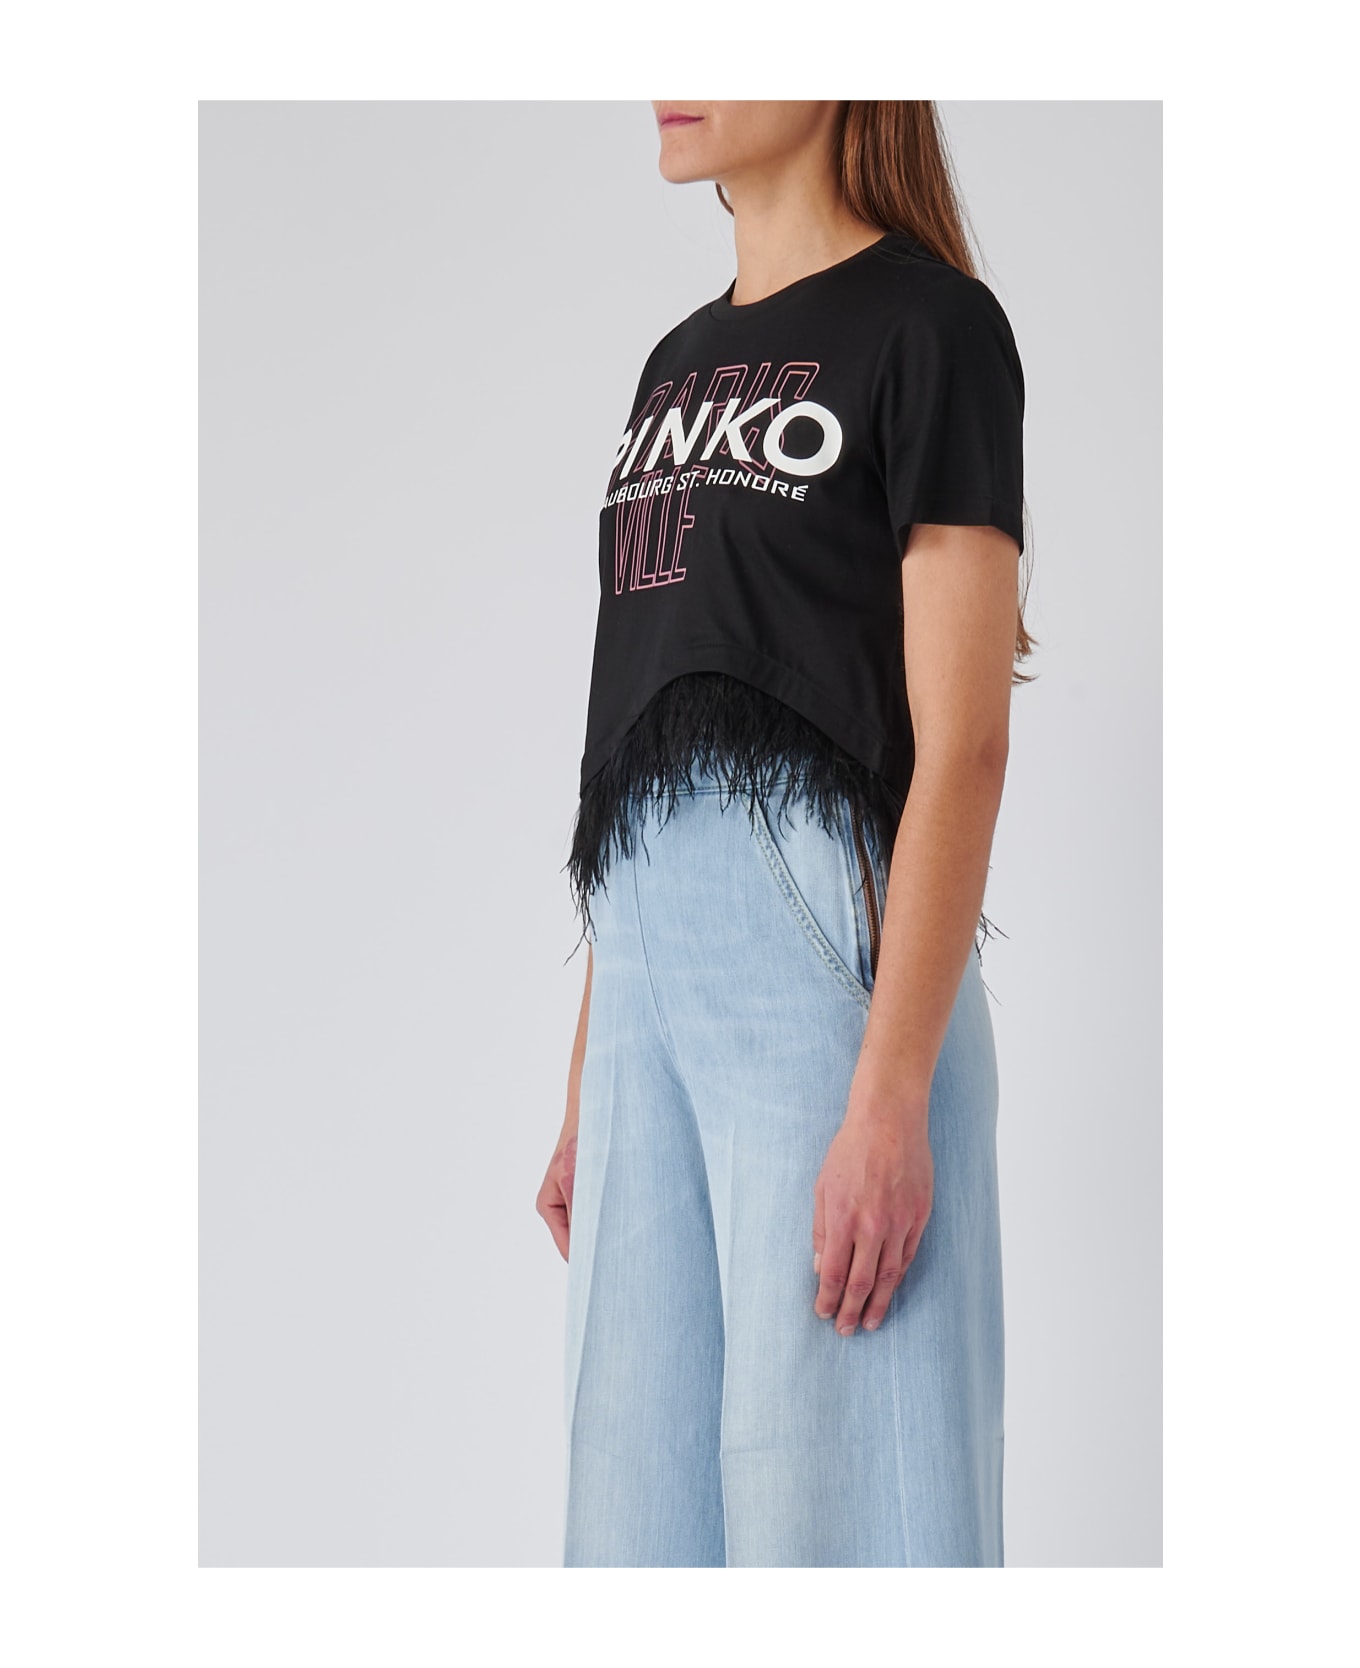 Pinko Martignano T-shirt - NERO